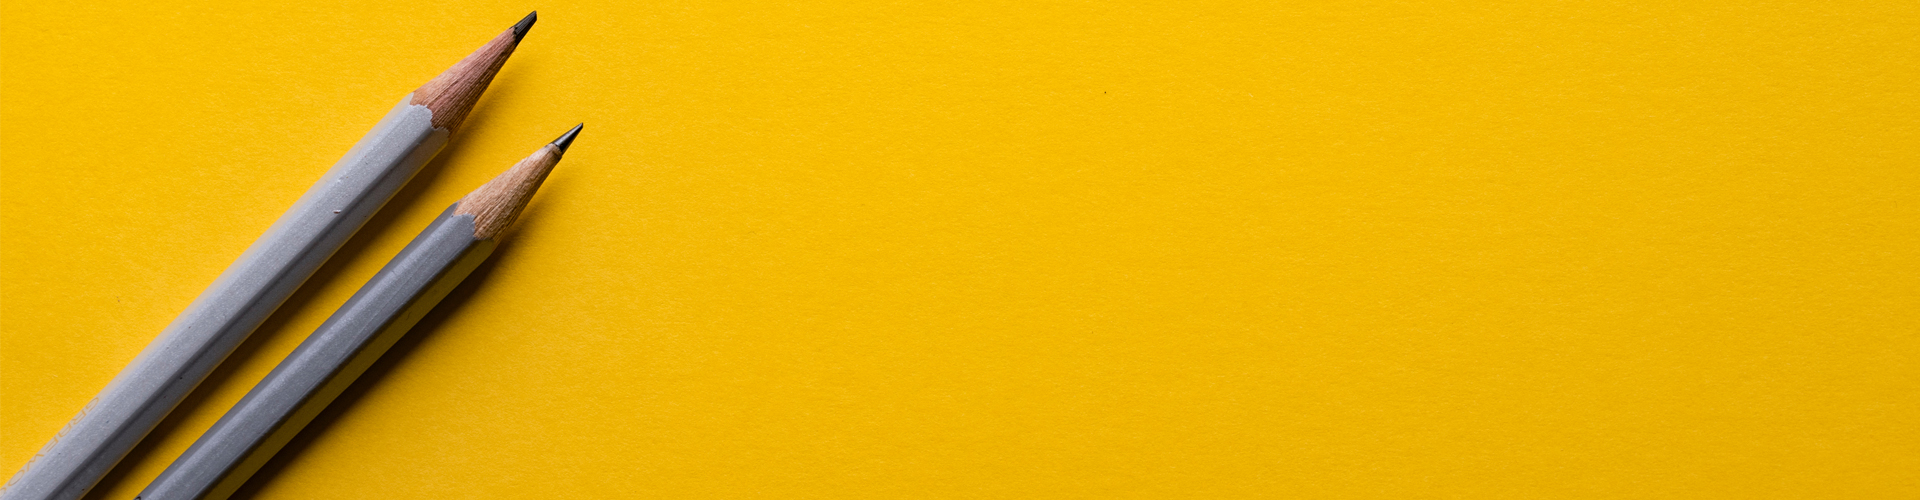 decorative yellow background